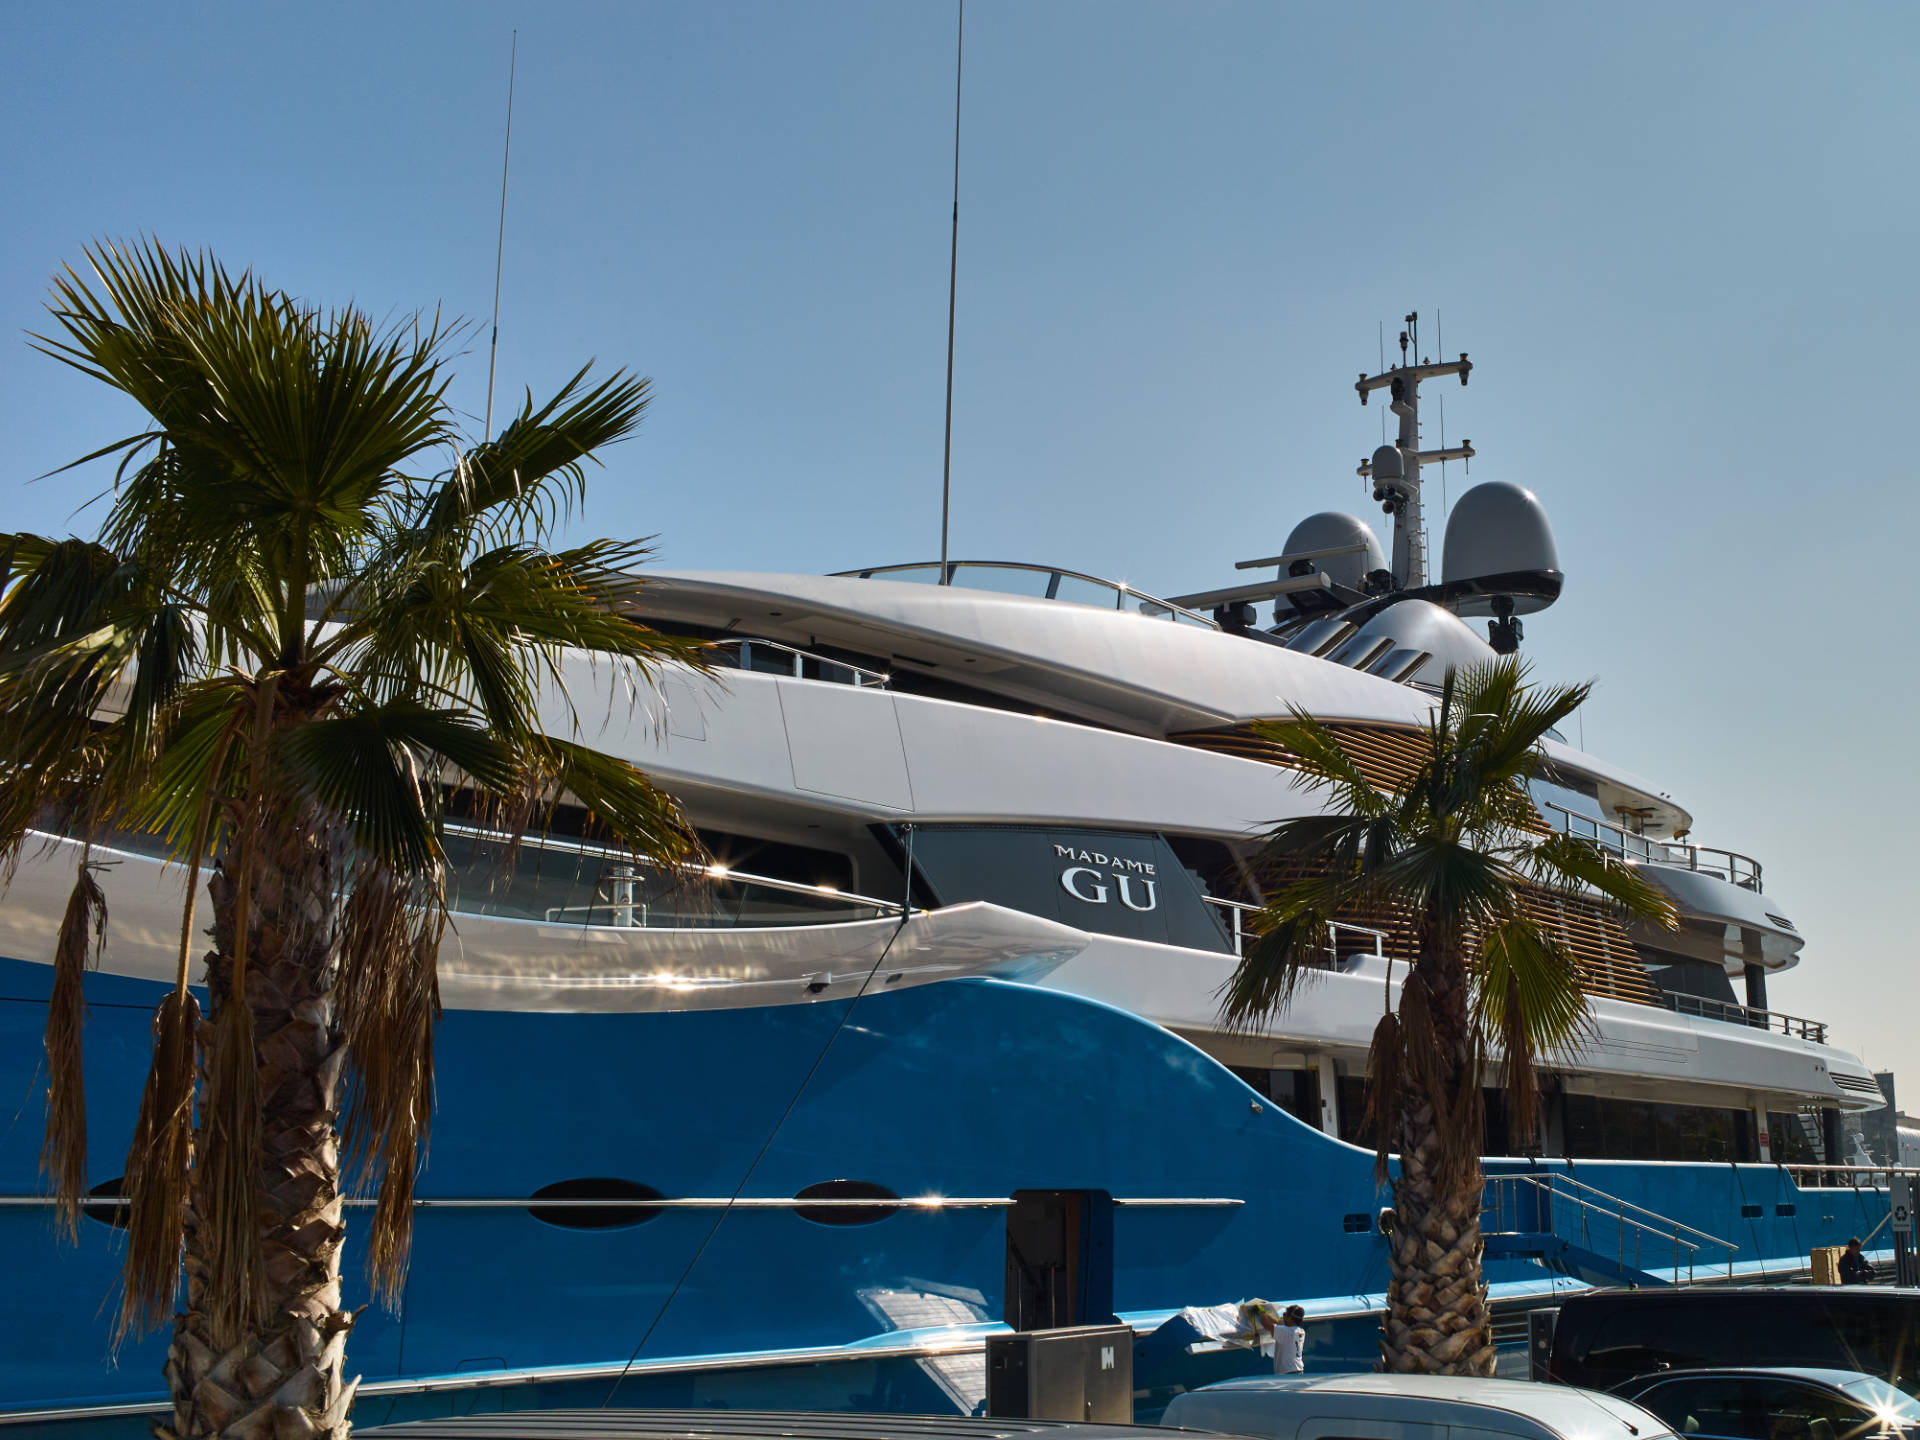 Barcelona – Port Vell, Superyacht Madame Gu + Dilbar.